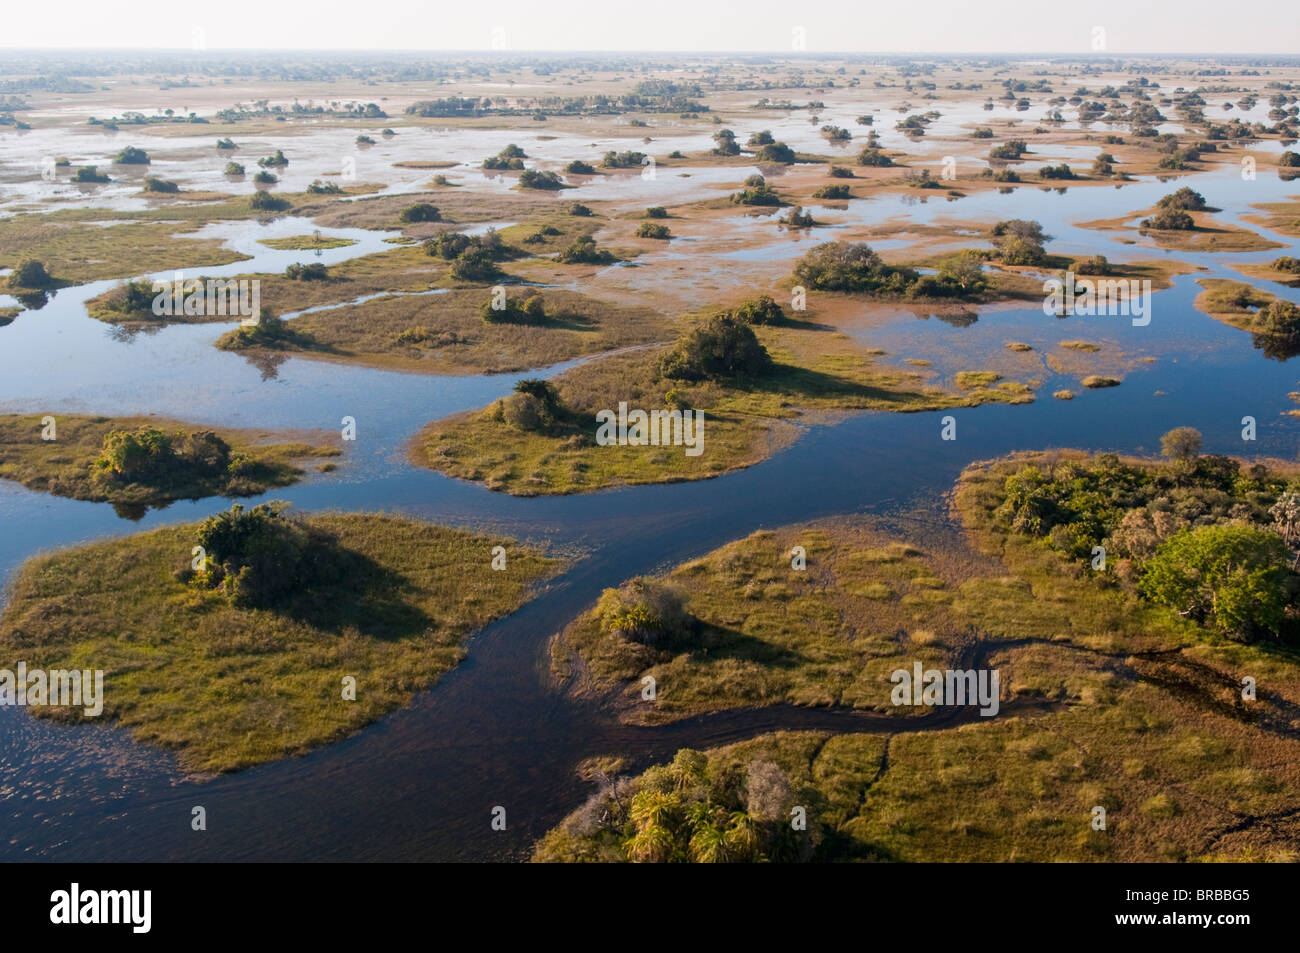 Aerial view of Okavango Delta, Botswana Stock Photo